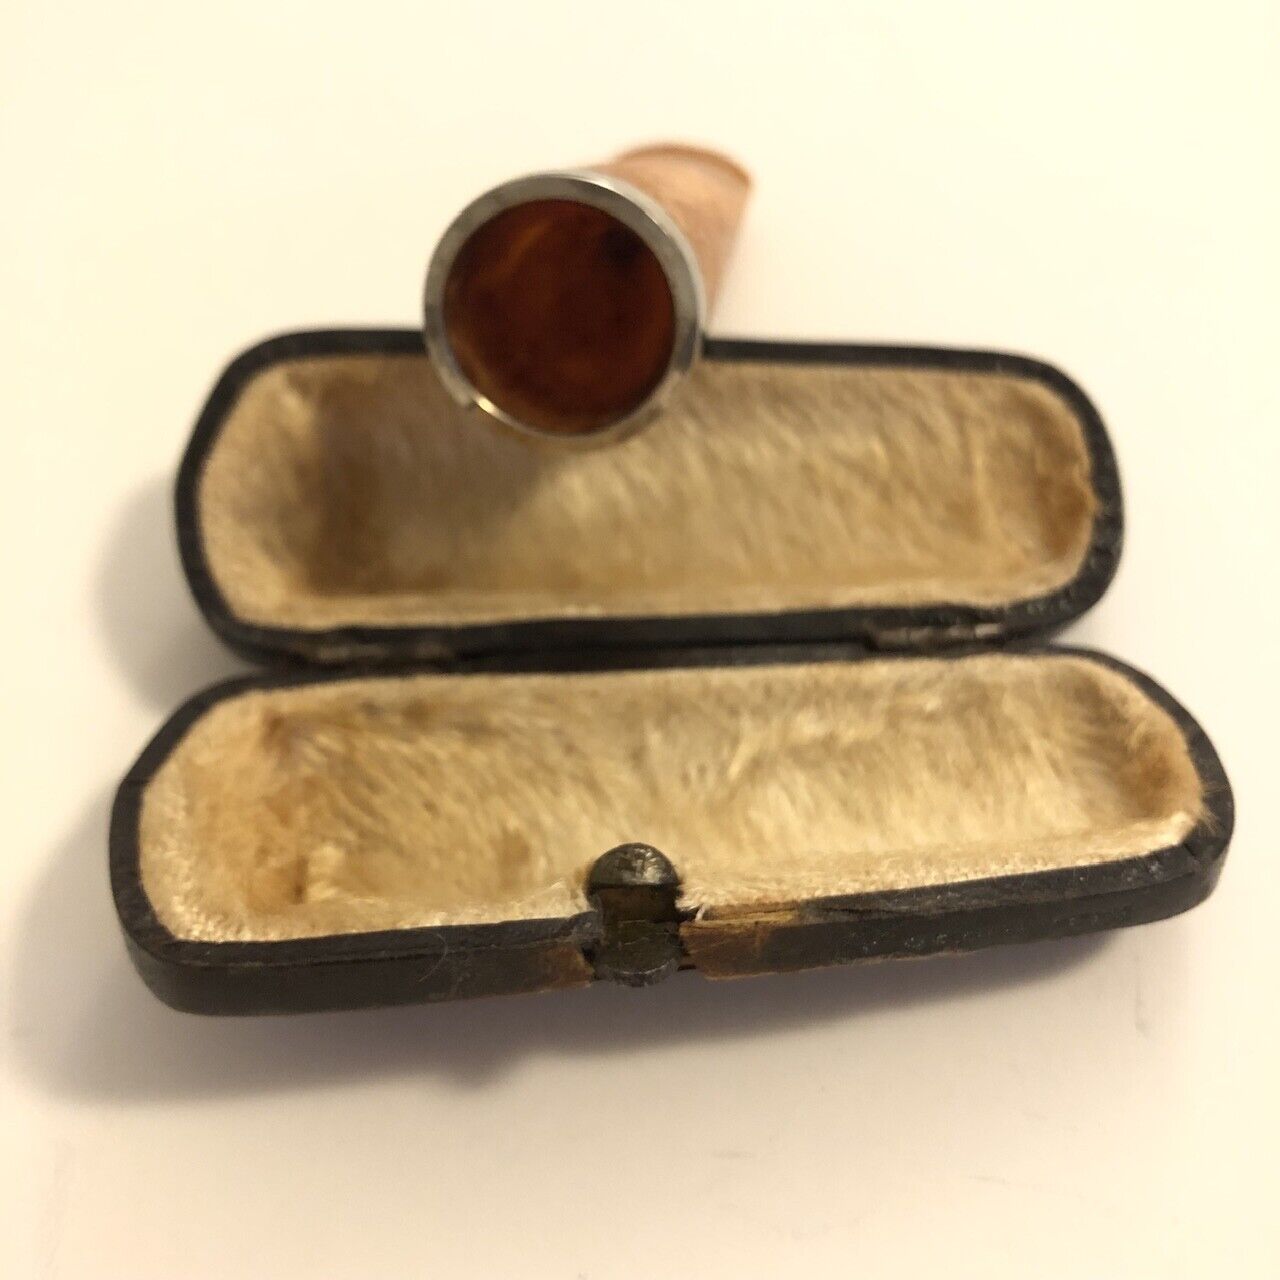 CLEANED Antique Amber CIGAR HOLDER with original case, made by Echt Bernstein